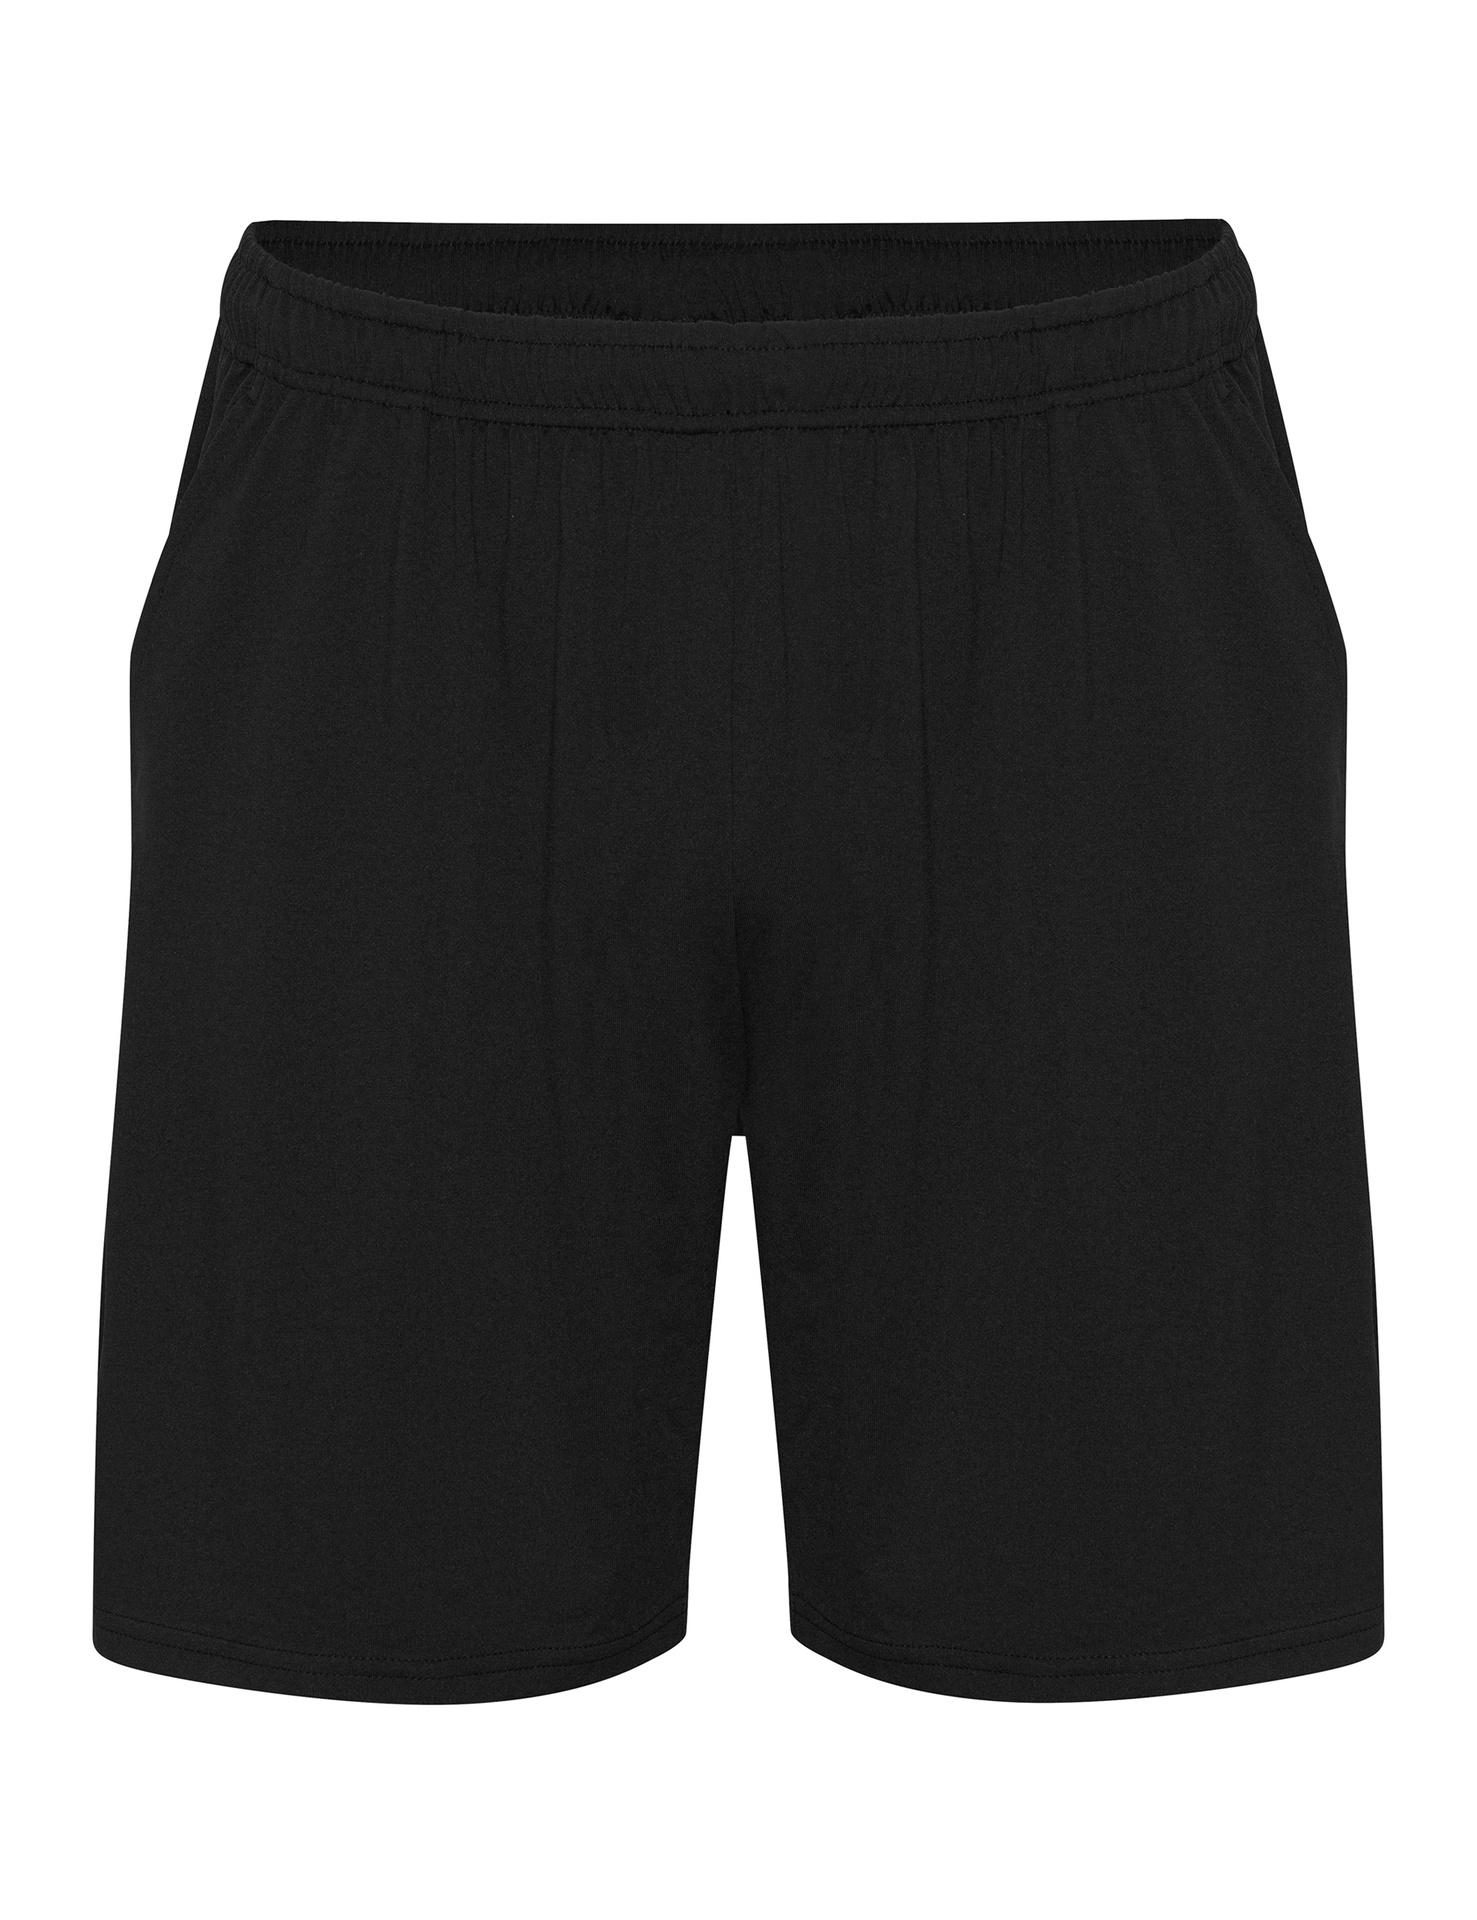 [PR/03860] Unisex Recycled Performance Shorts (Black 03, XL)